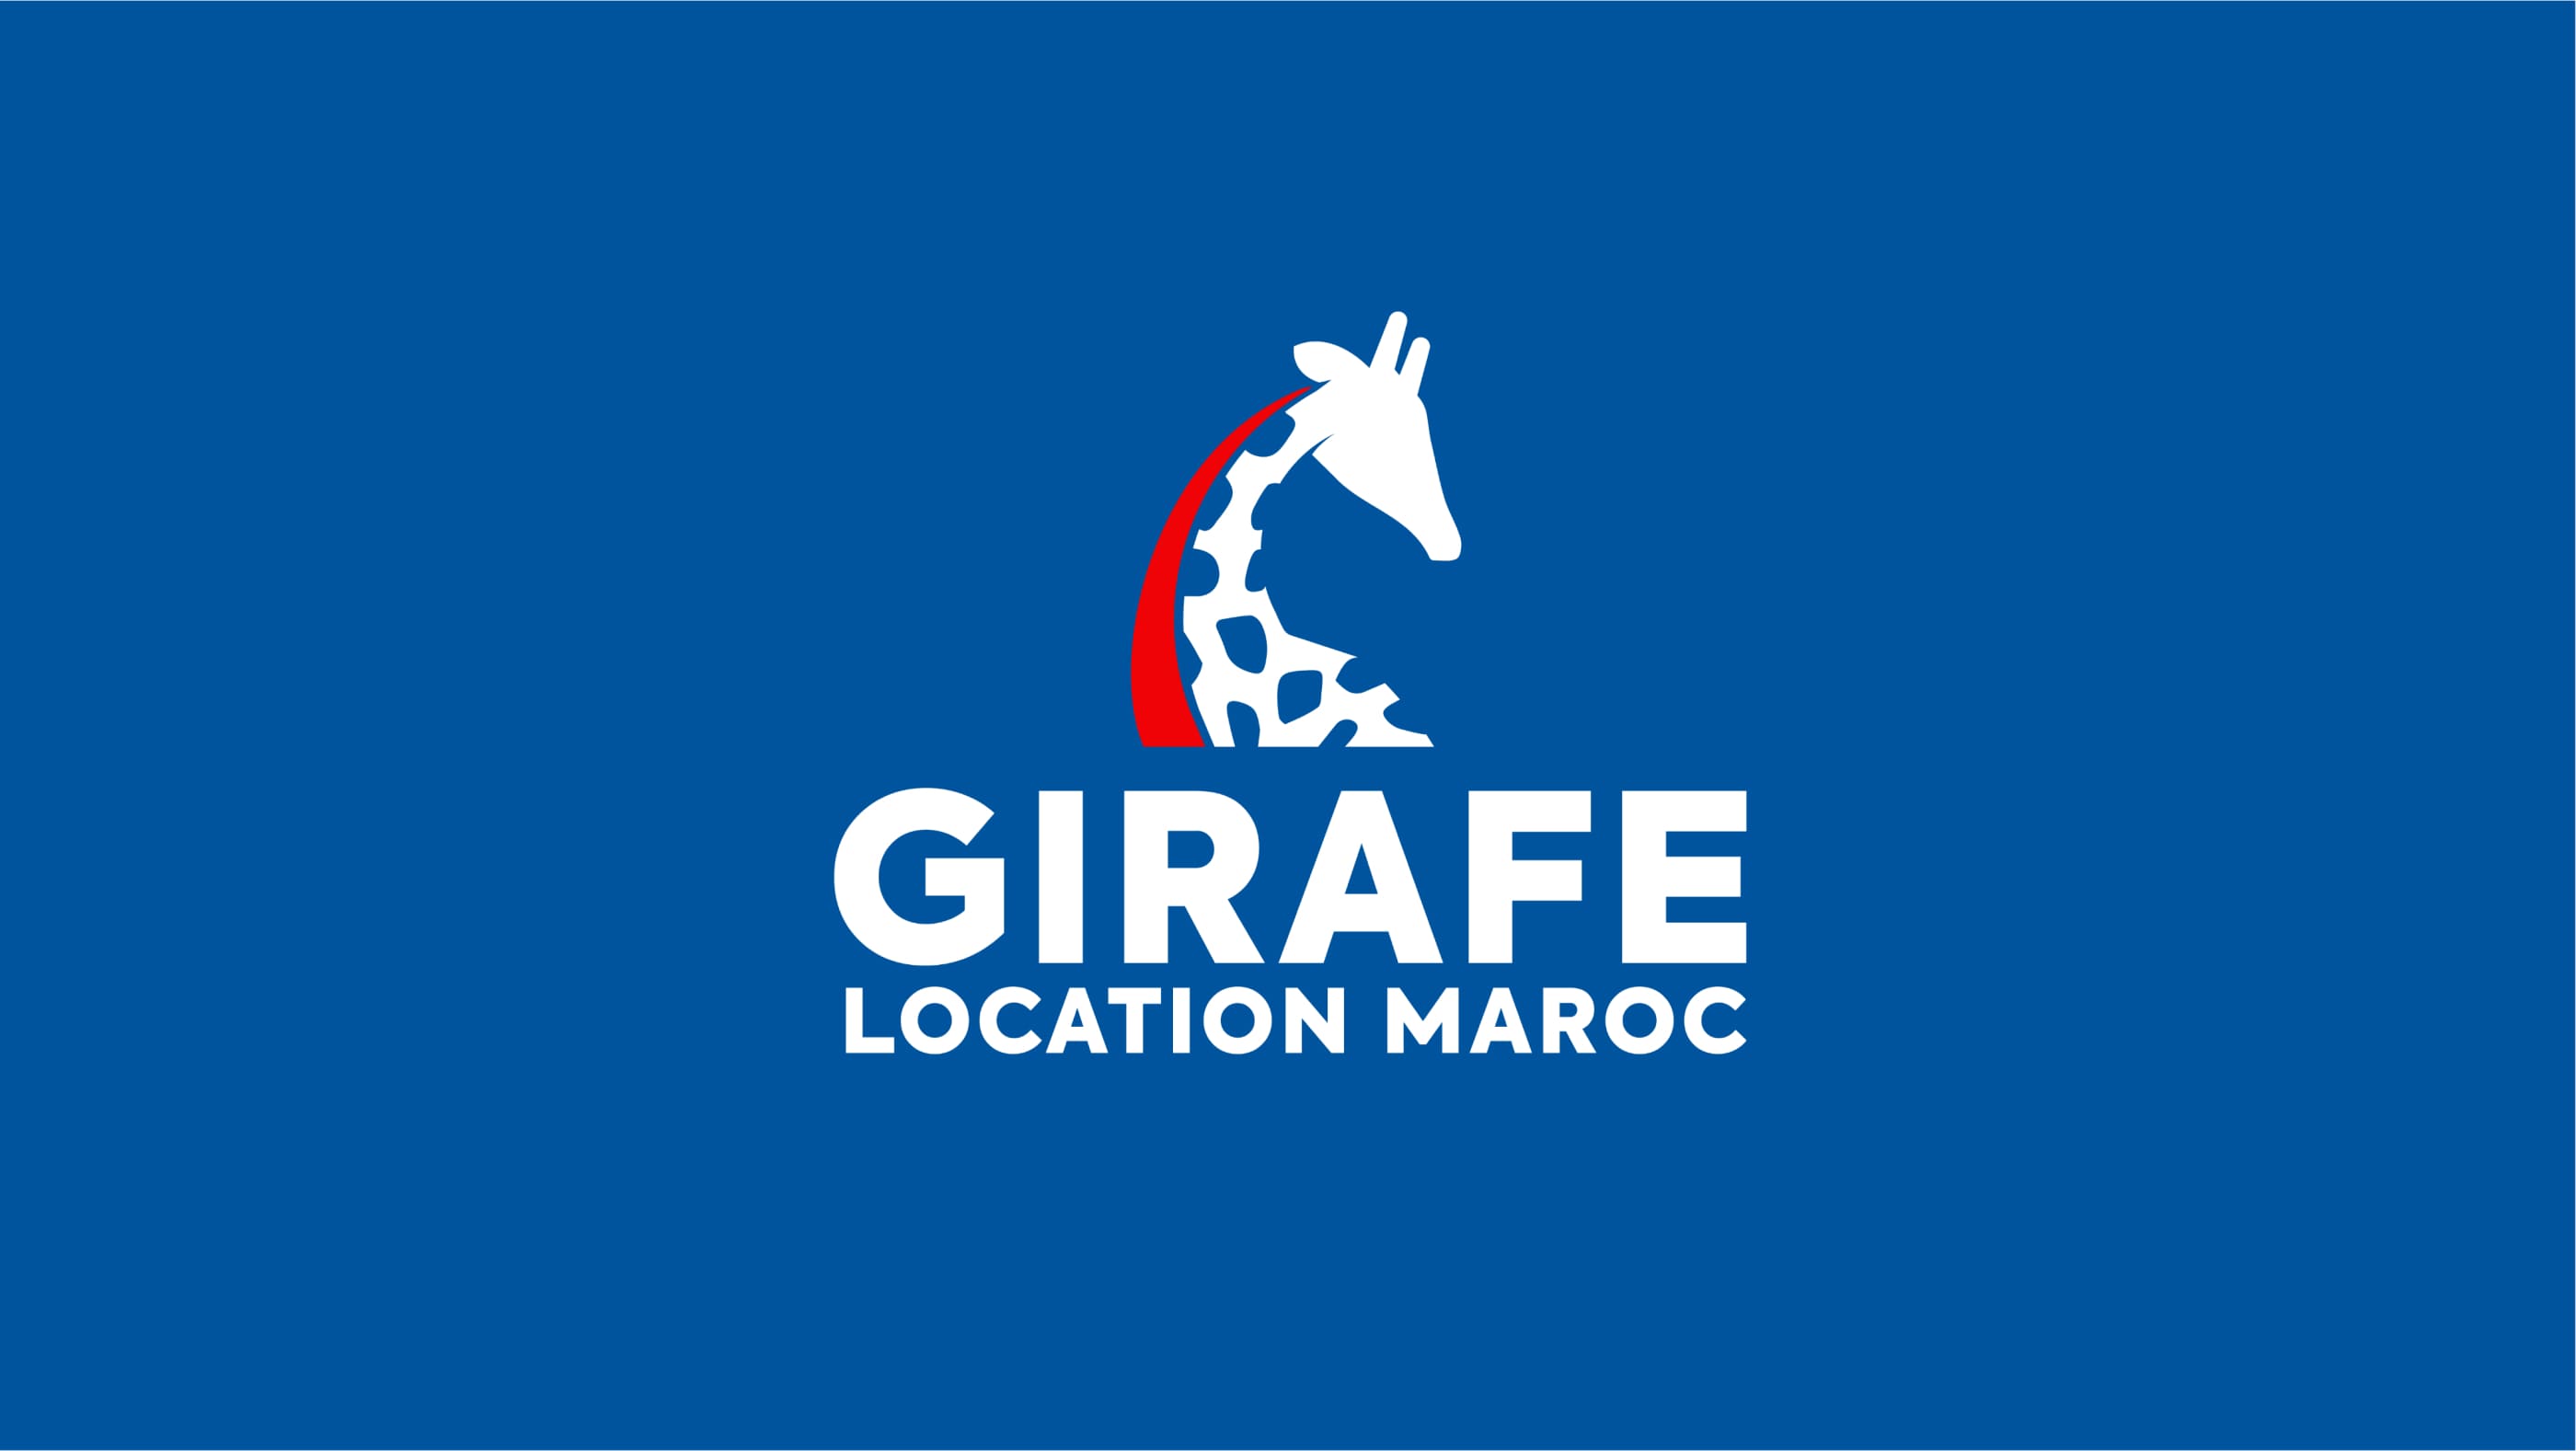 Logo & Identity Design: Elevating Girafe Location Maroc’s Brand Identity to New Heights